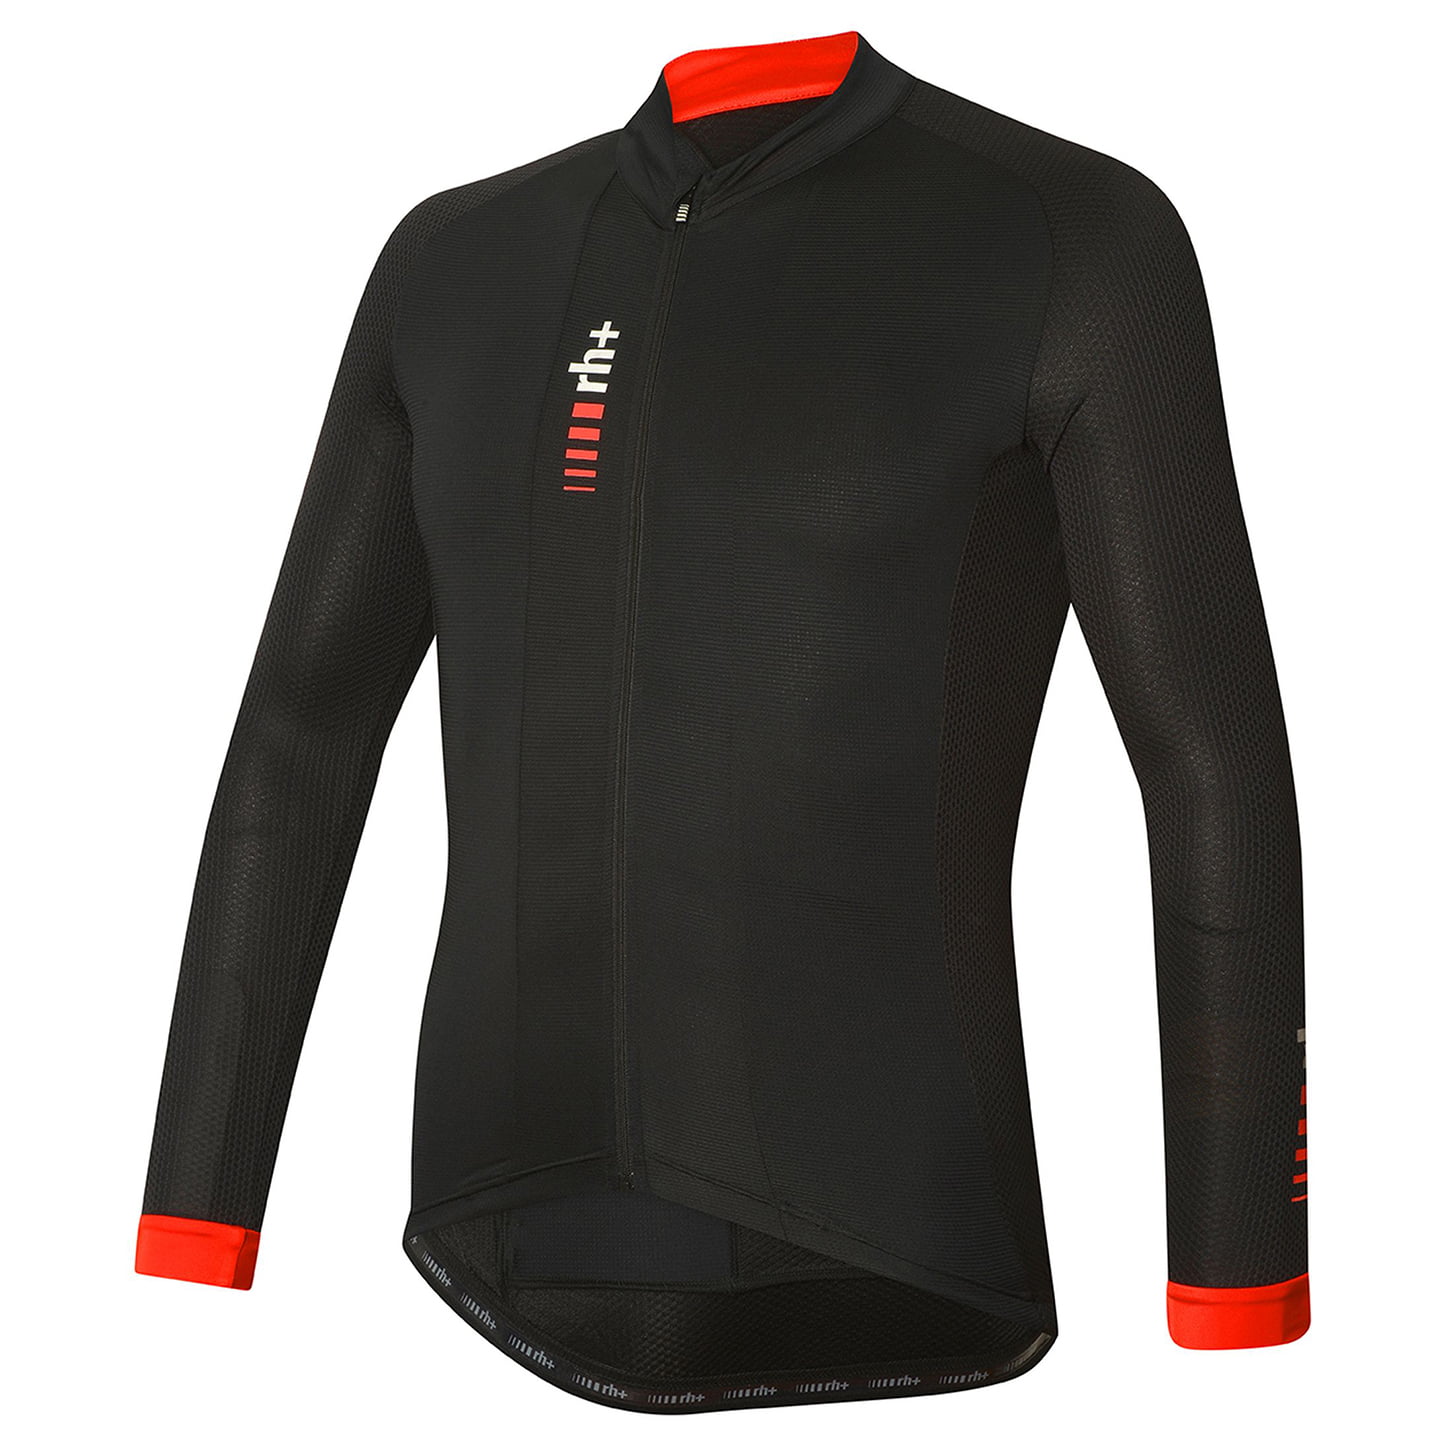 rh+ XYZ Long Sleeve Jersey Long Sleeve Jersey, for men, size M, Cycling jersey, Cycling clothing